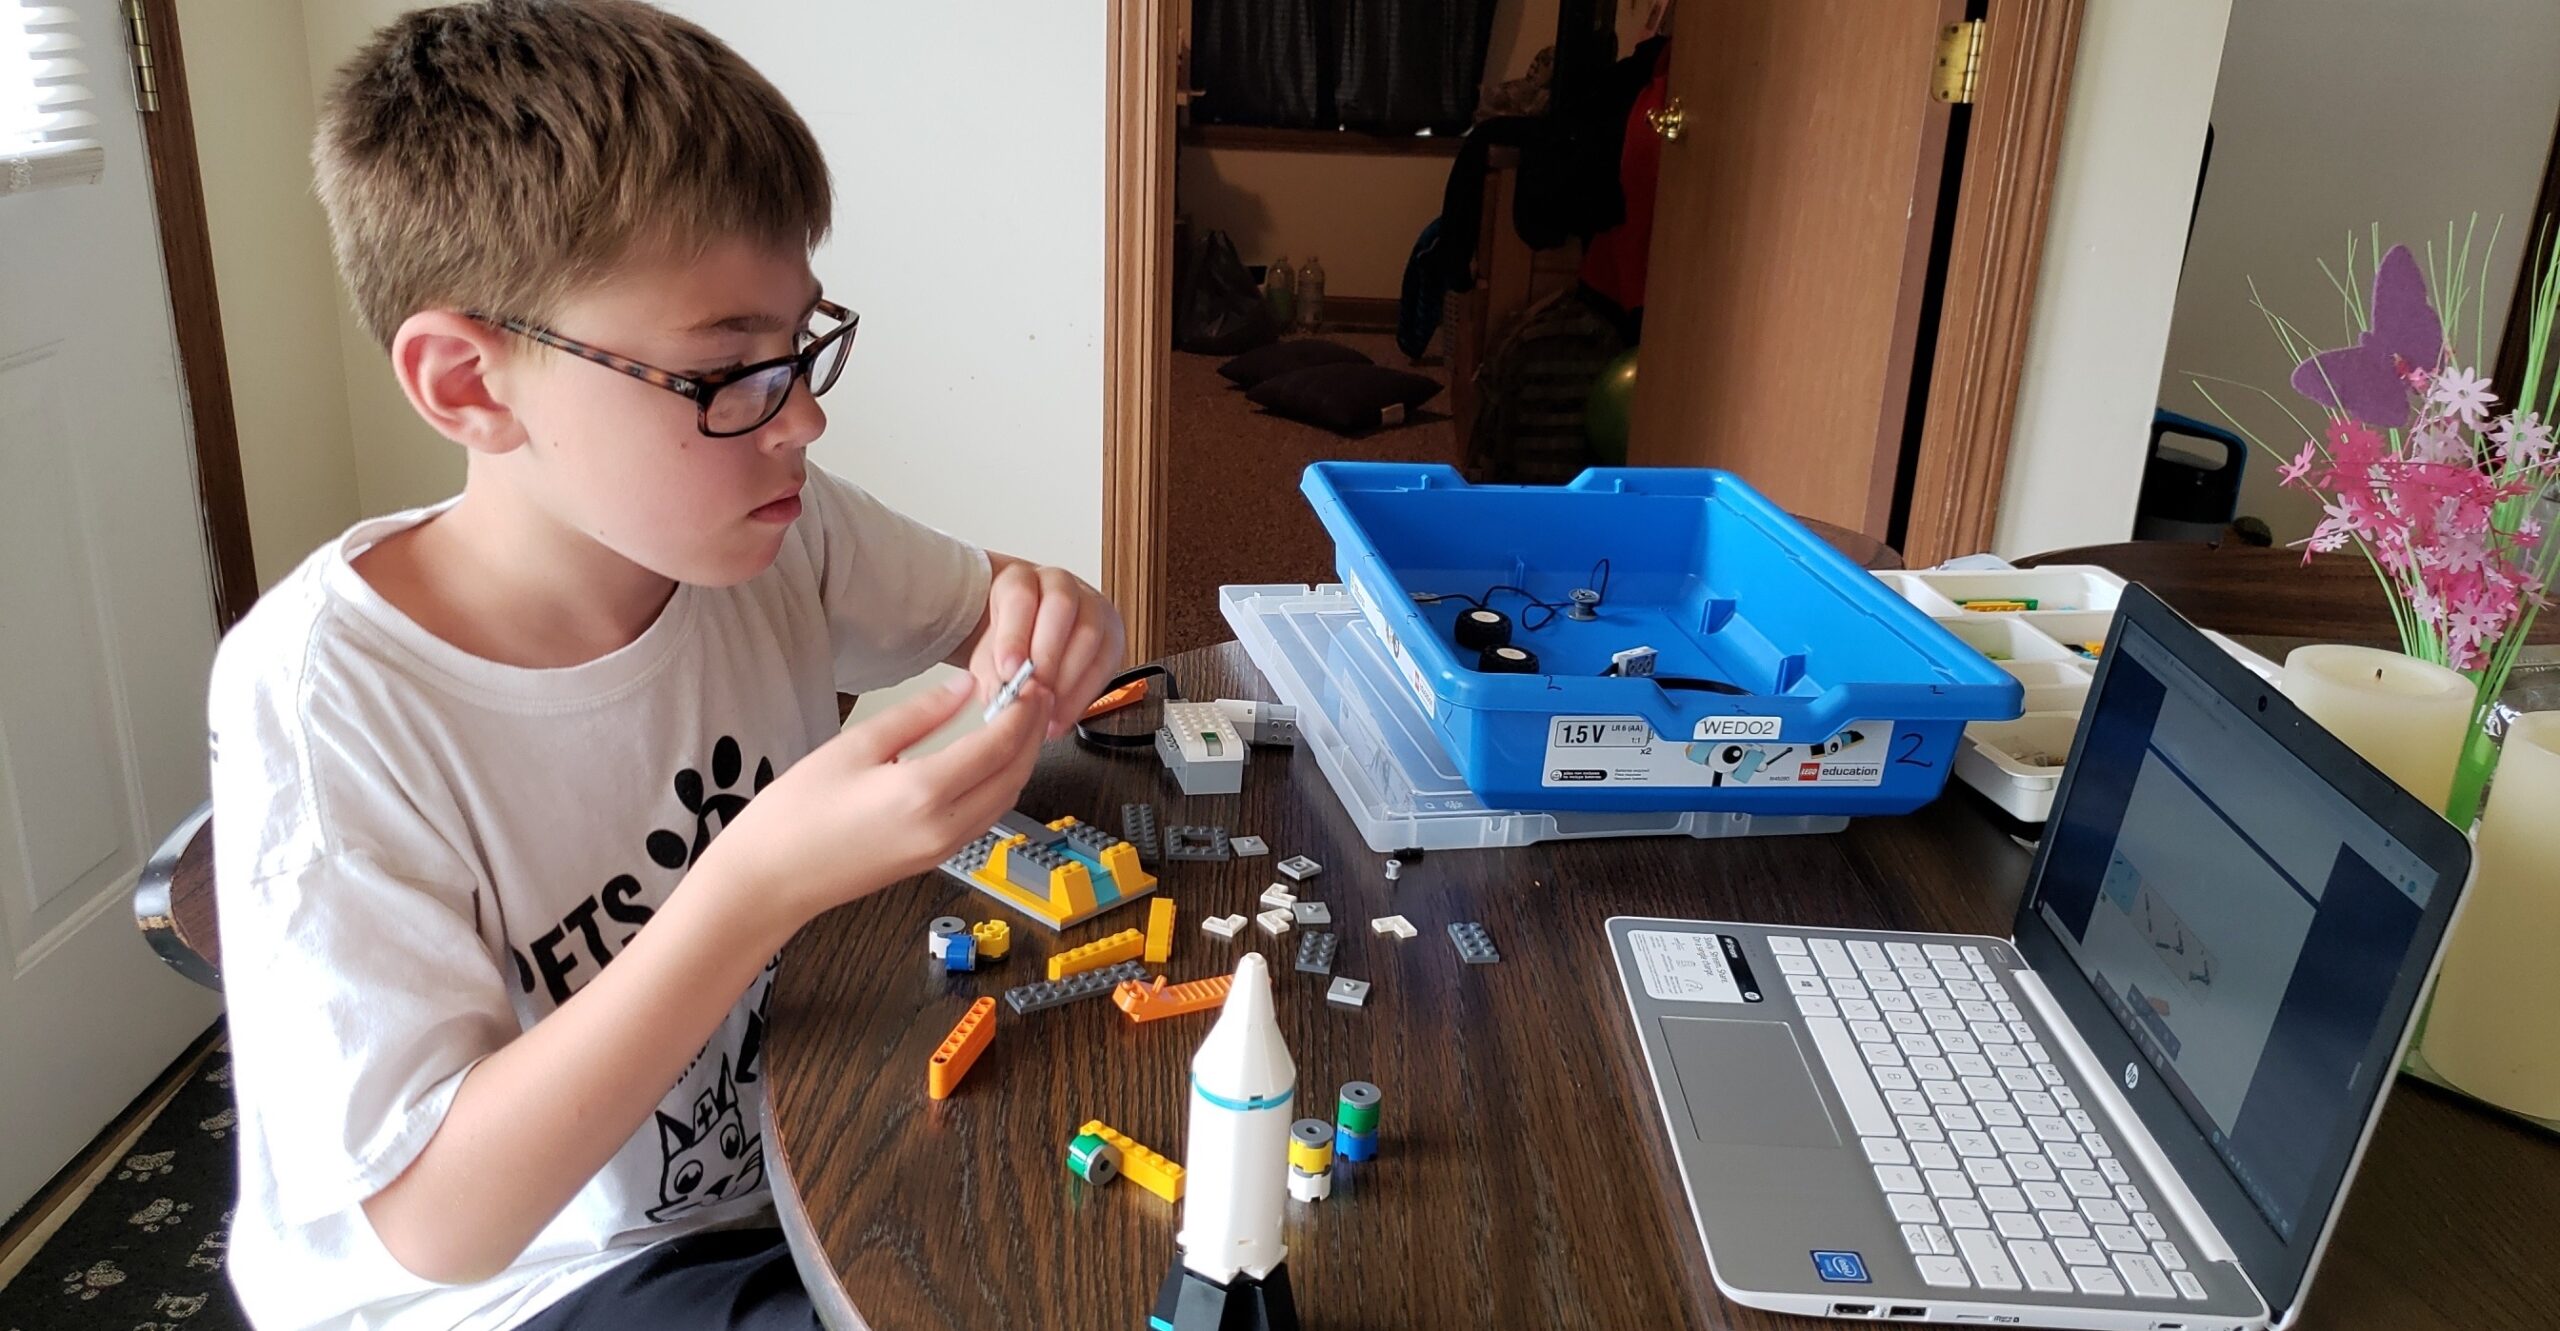 Fulton Academy camper building a LEGO Robot